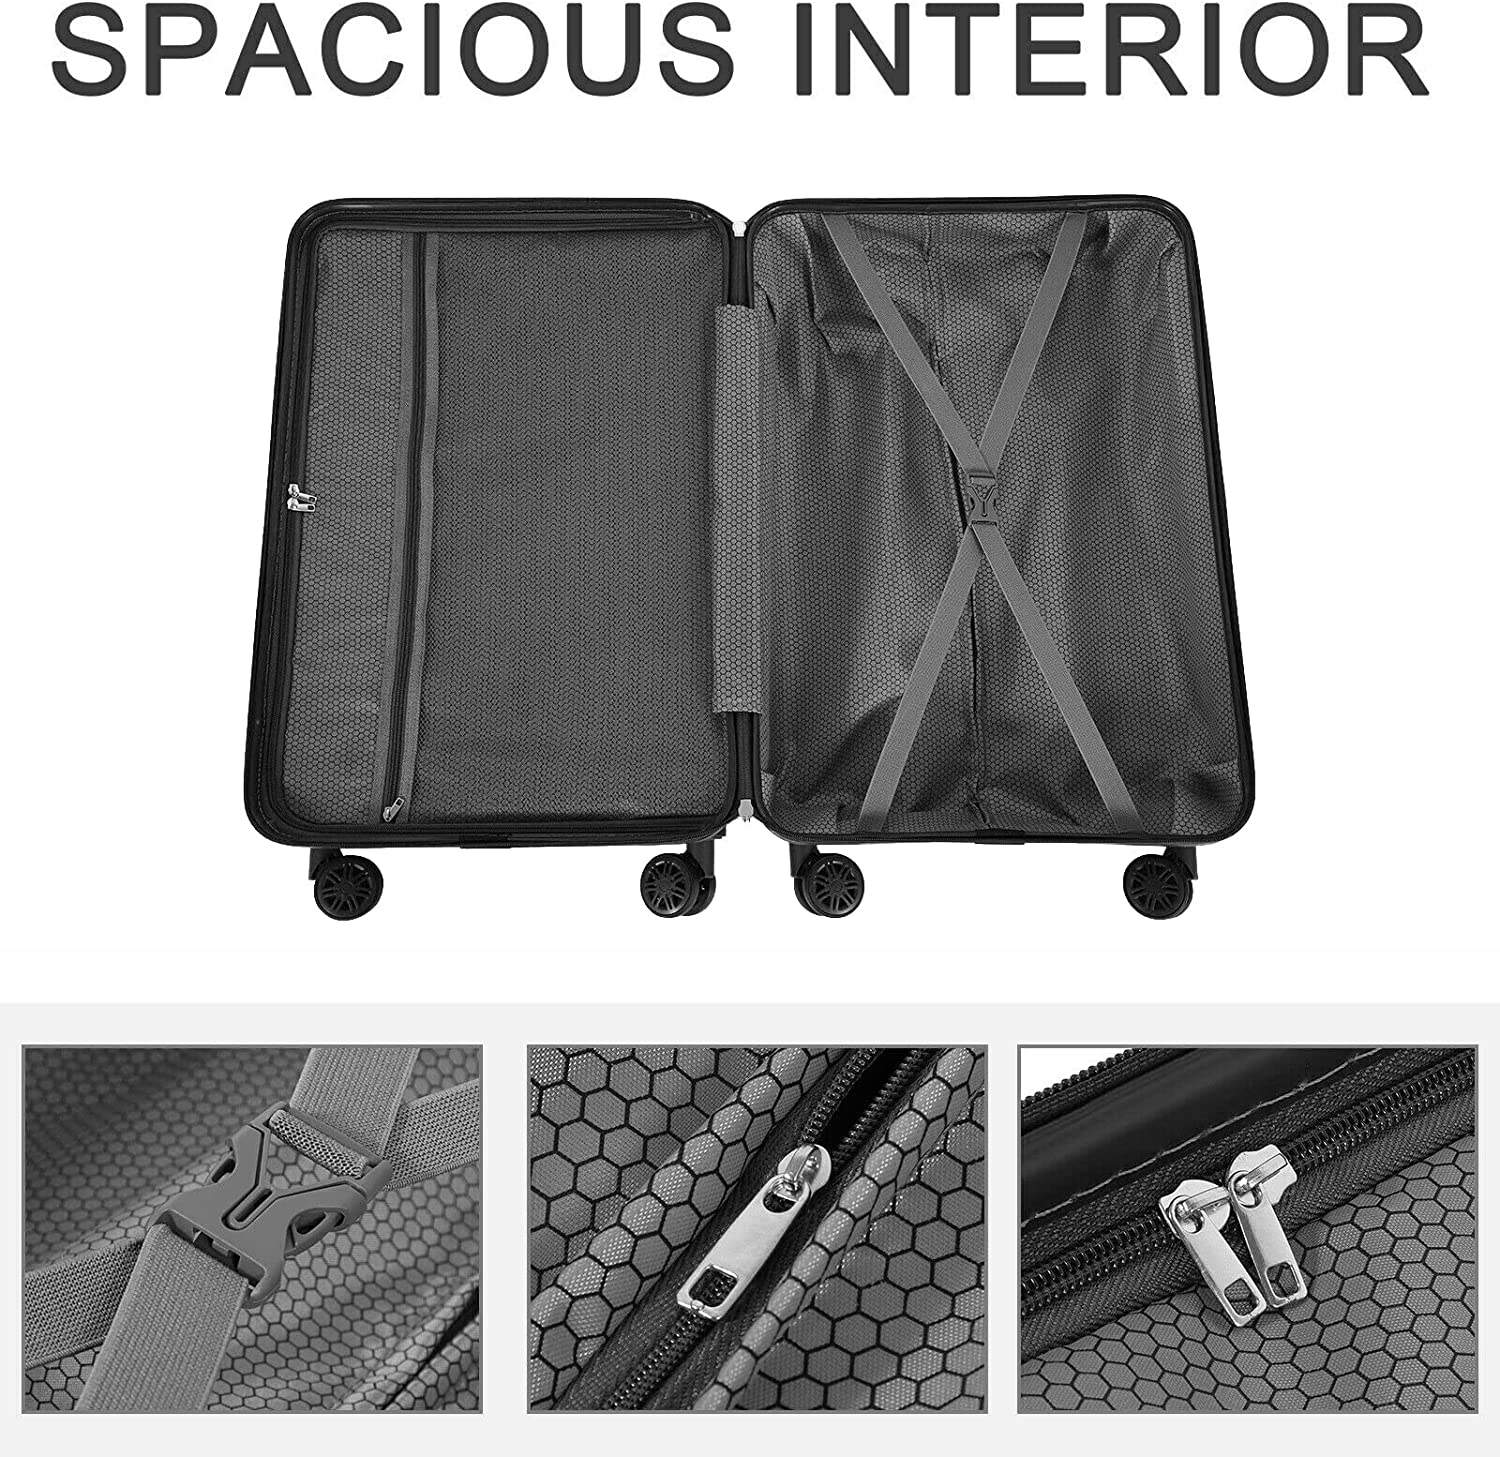 Hikolayae Border Collection Hardside Spinner Luggage Sets in Argent Silver, 3 Piece - TSA Lock - image 5 of 5